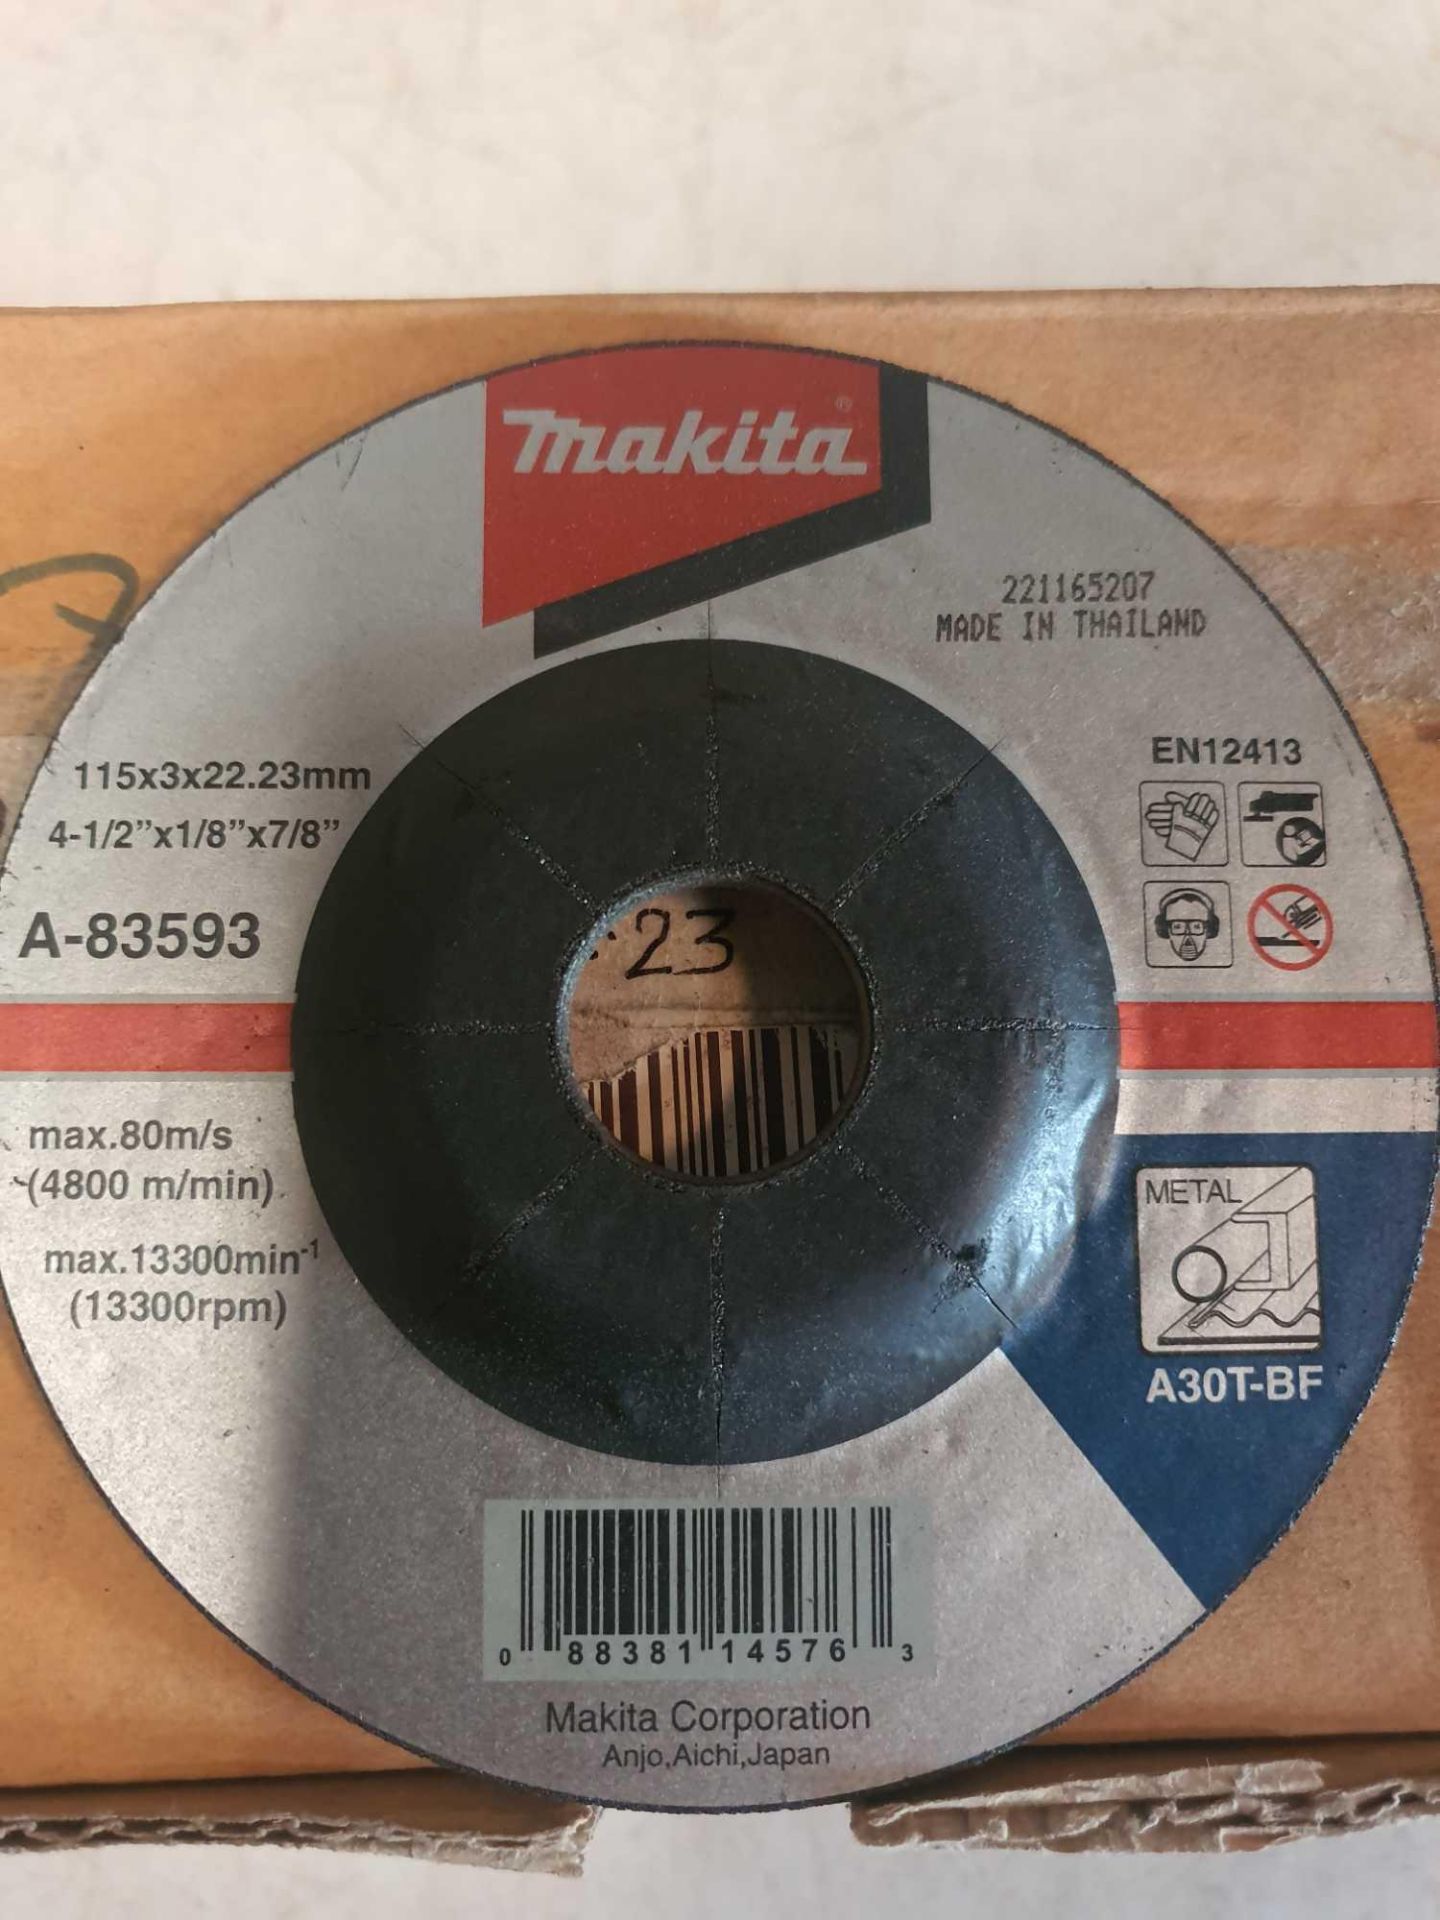 Makita cutting discs - Image 2 of 2